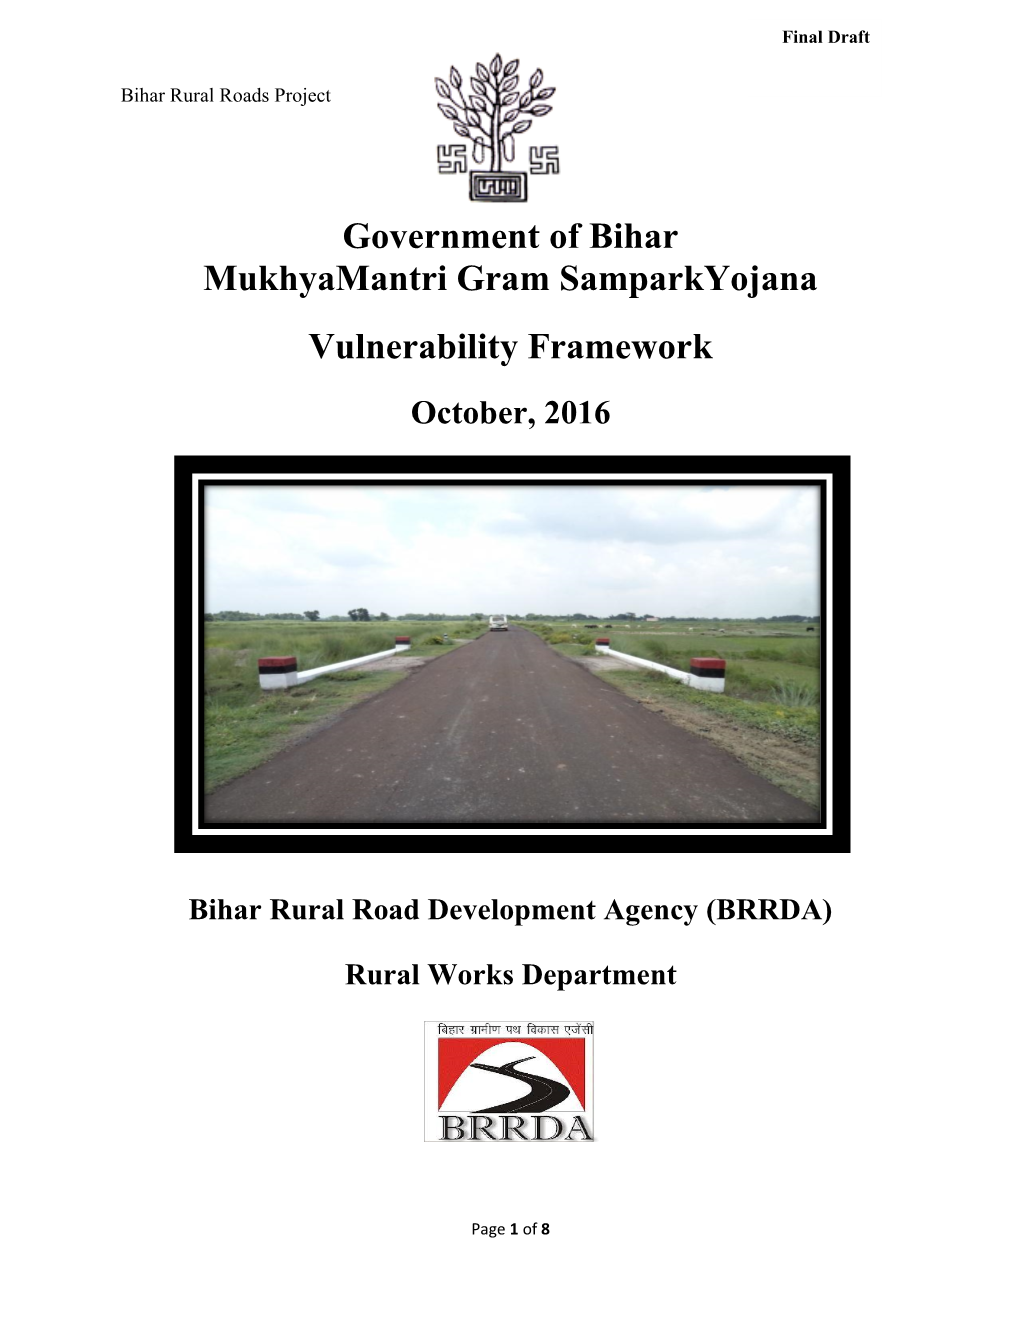 Government of Bihar Mukhyamantri Gram Samparkyojana Vulnerability Framework October, 2016